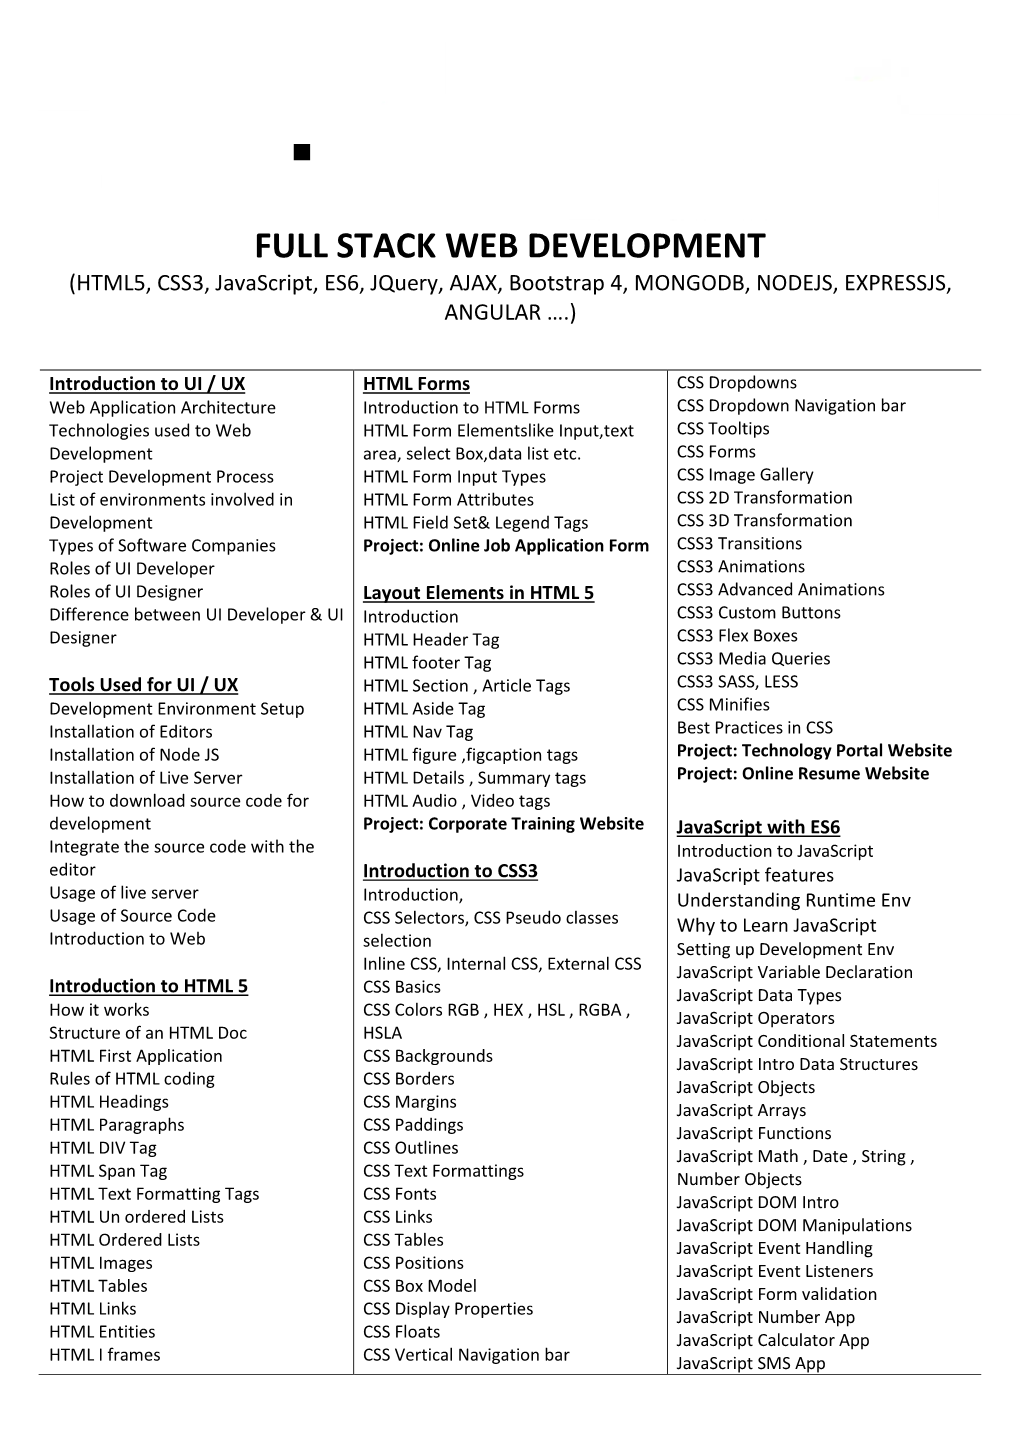 FULL STACK WEB DEVELOPMENT (HTML5, CSS3, Javascript, ES6, Jquery, AJAX, Bootstrap 4, MONGODB, NODEJS, EXPRESSJS, ANGULAR ….)